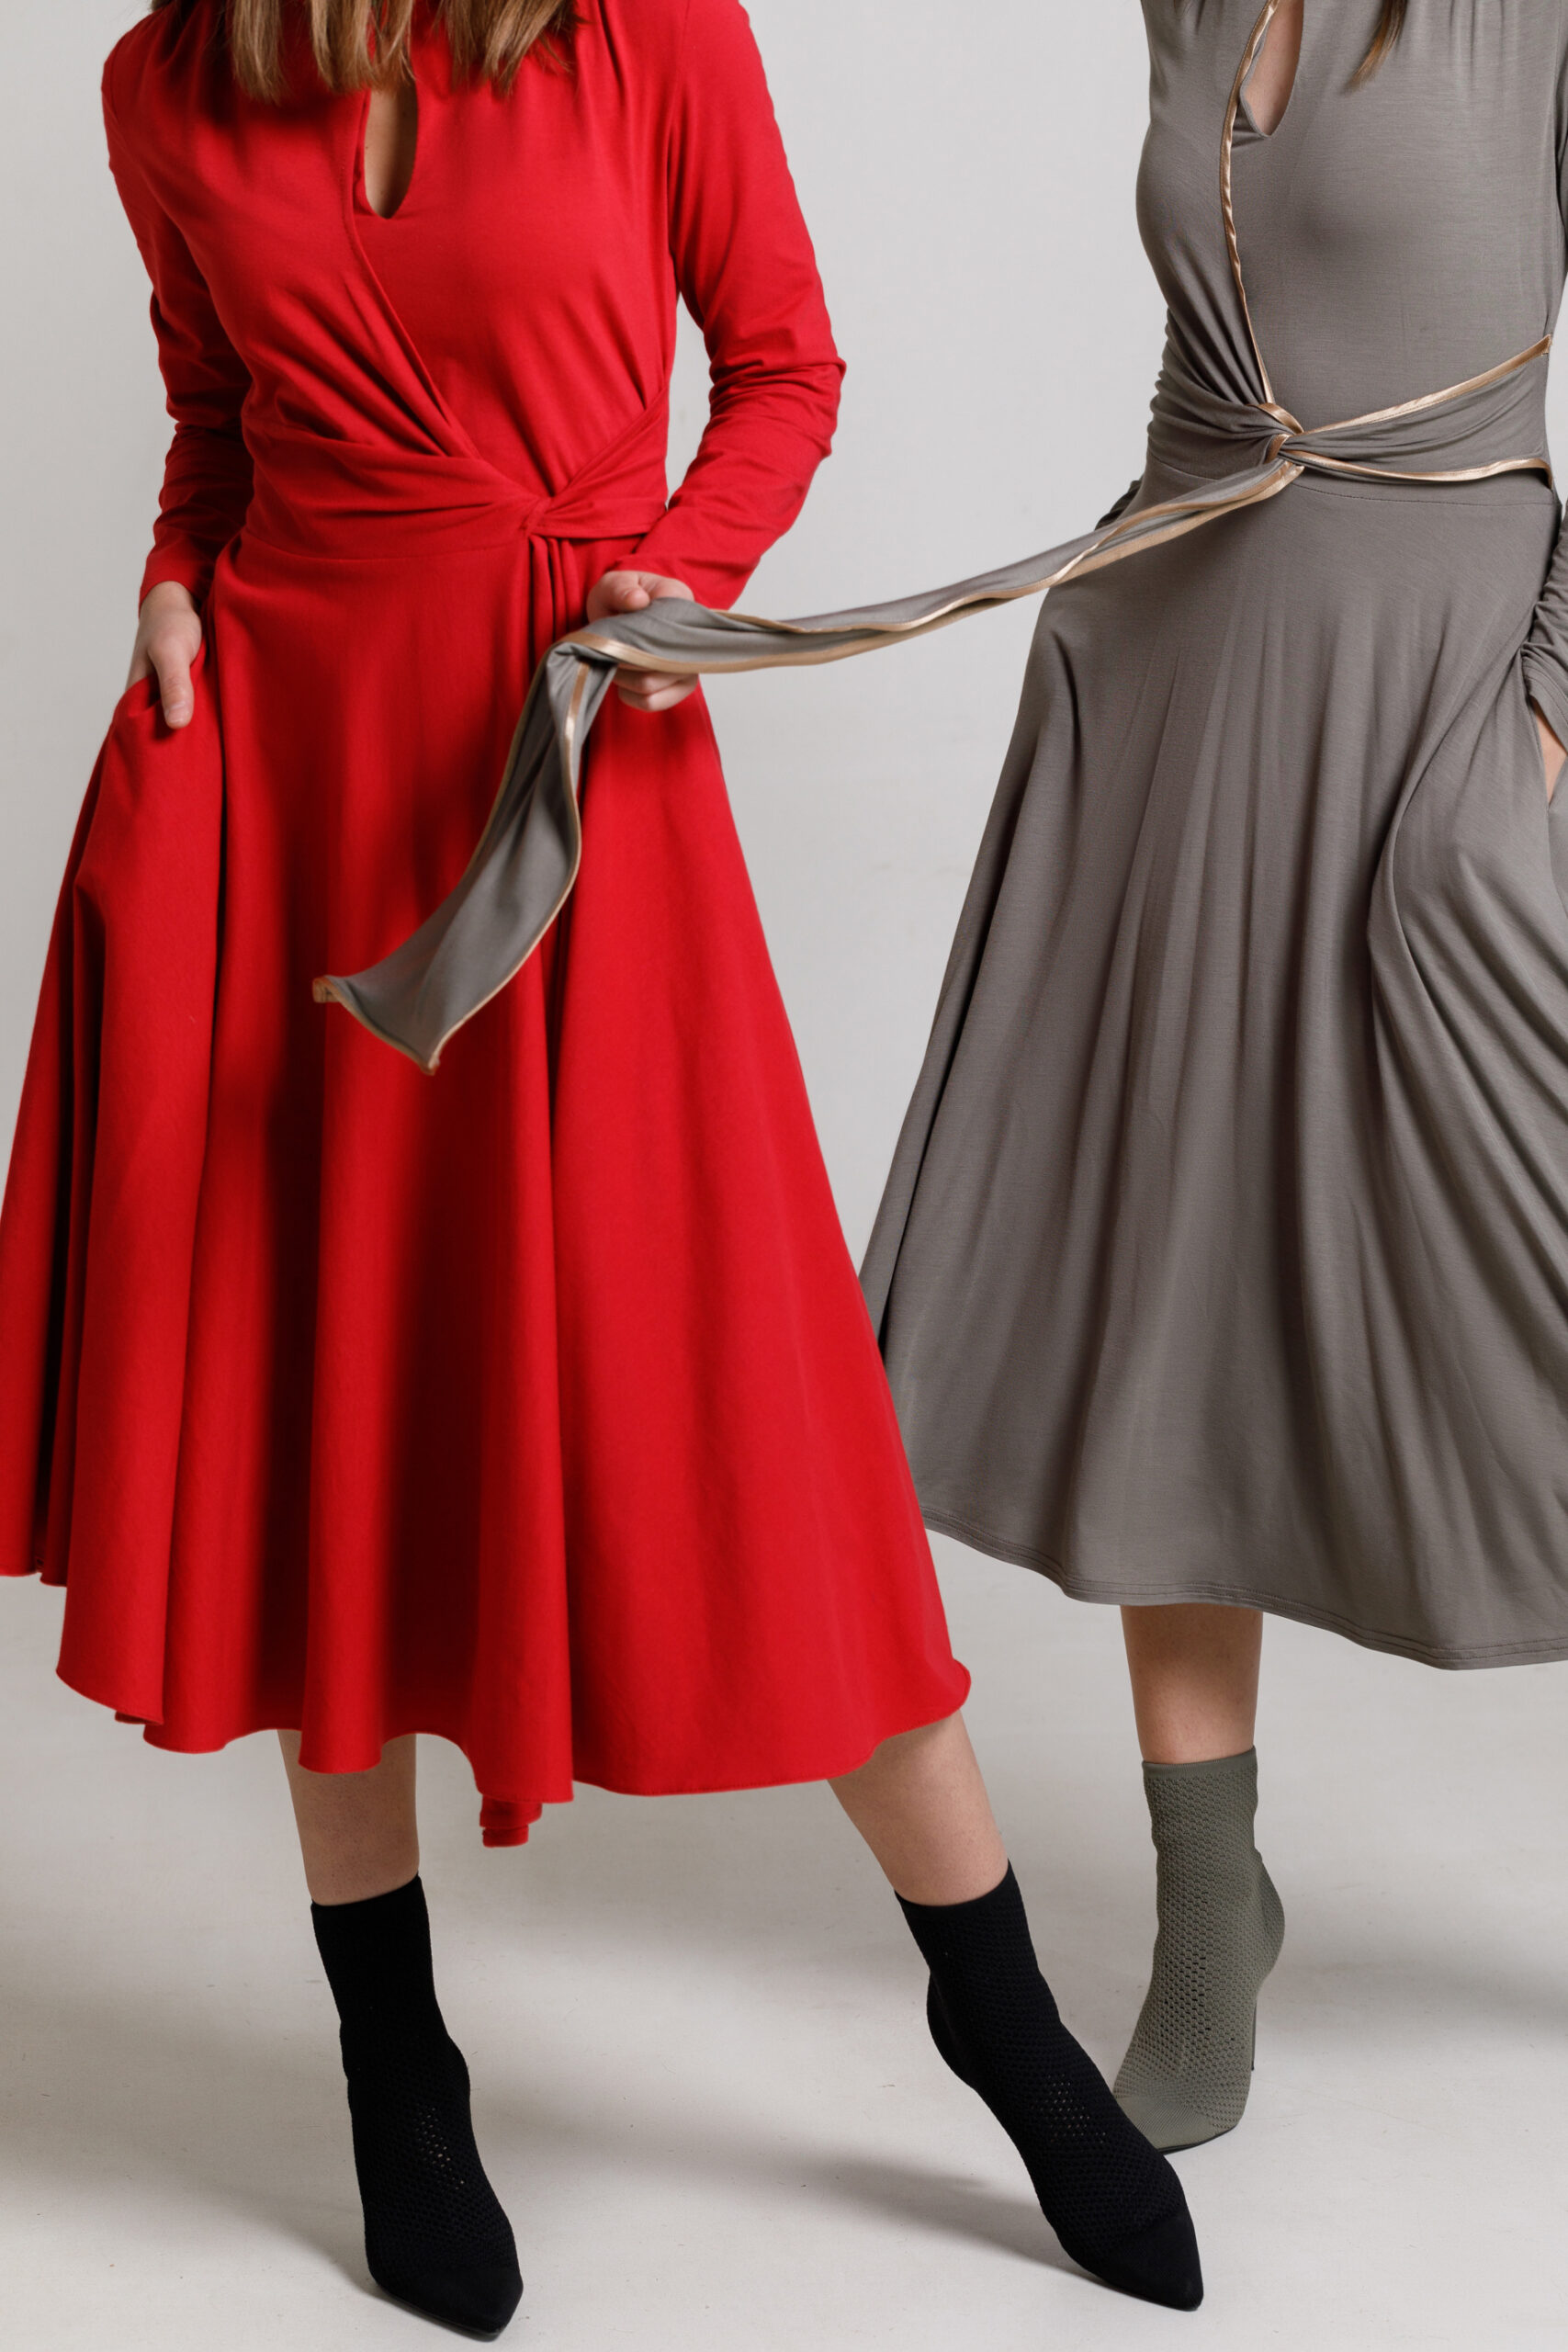 DRESS RYLEI red casual jersey. Natural fabrics, original design, handmade embroidery